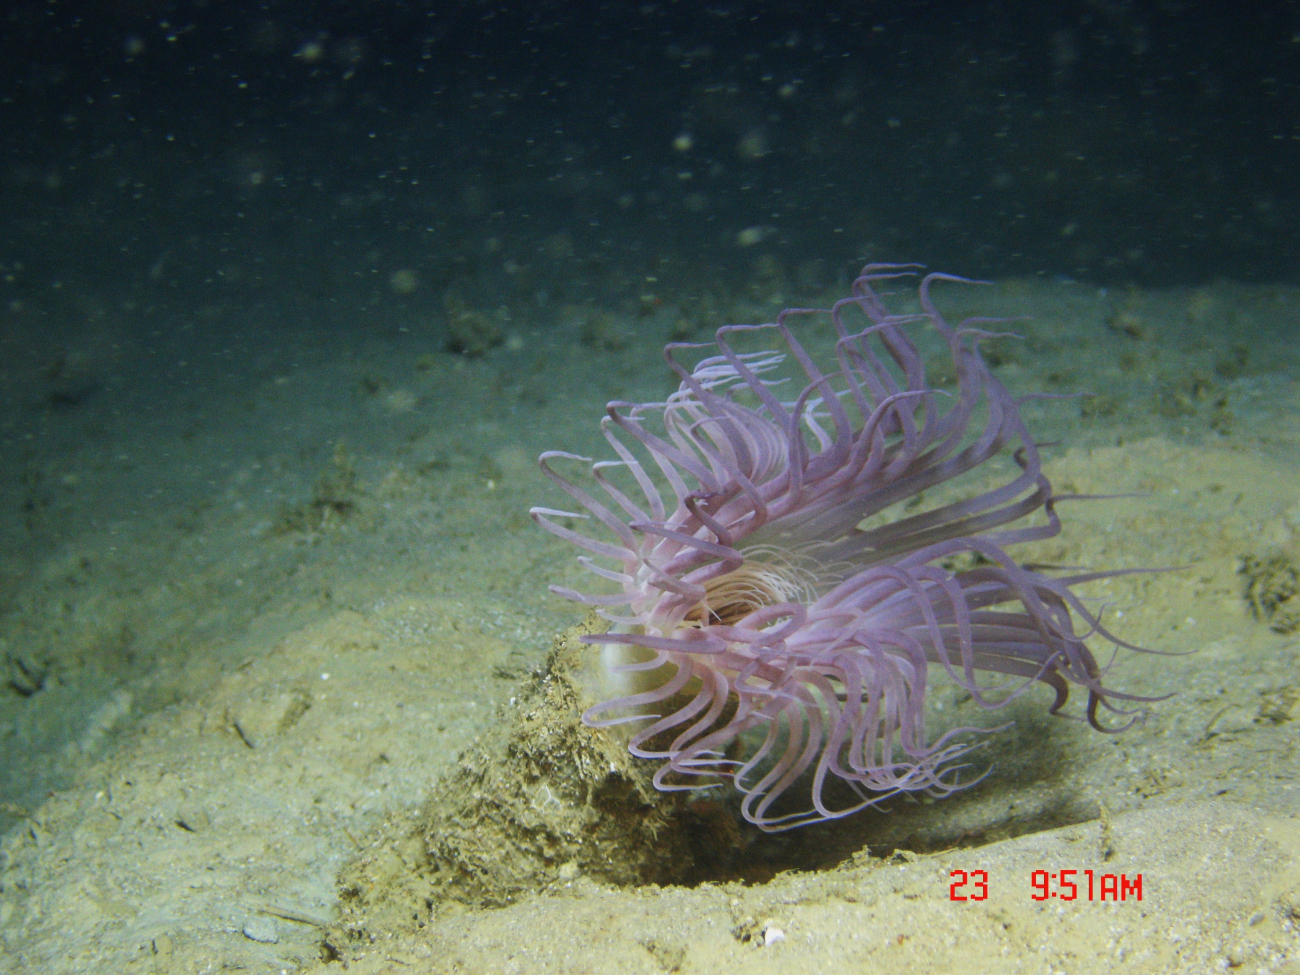 A large purple anemone